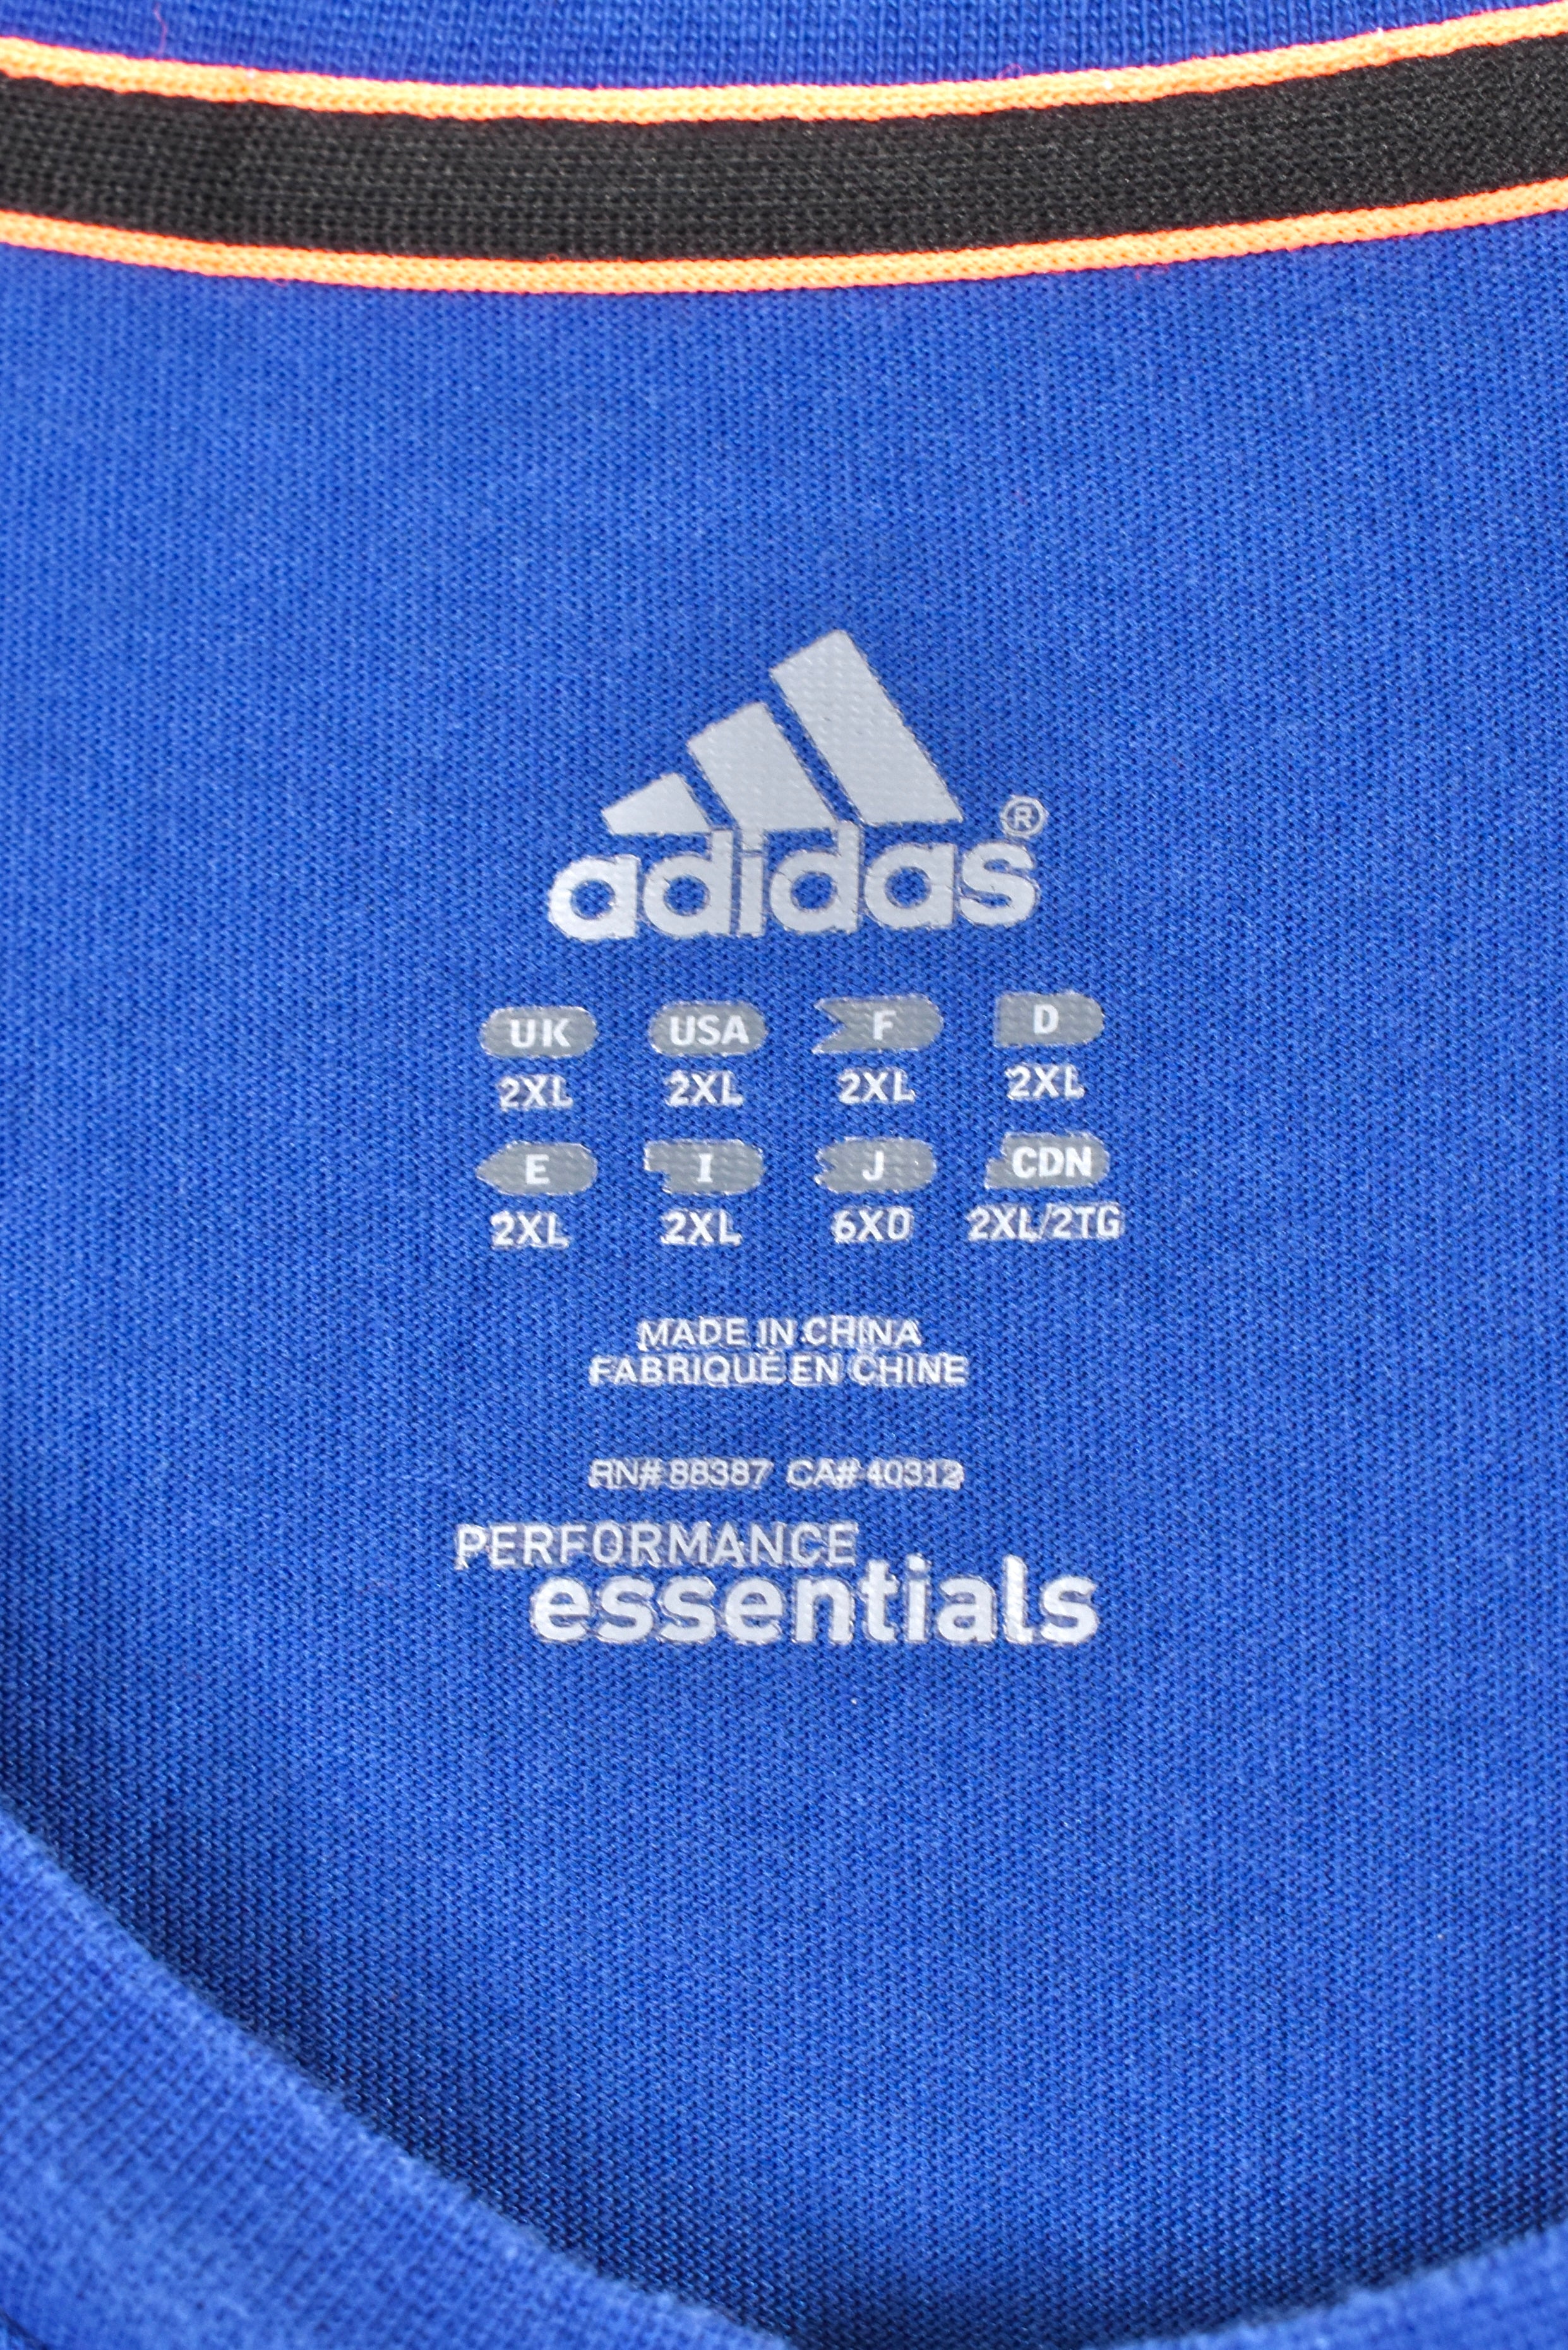 Modern Adidas shirt, blue embroidered tee - AU XXL ADIDAS